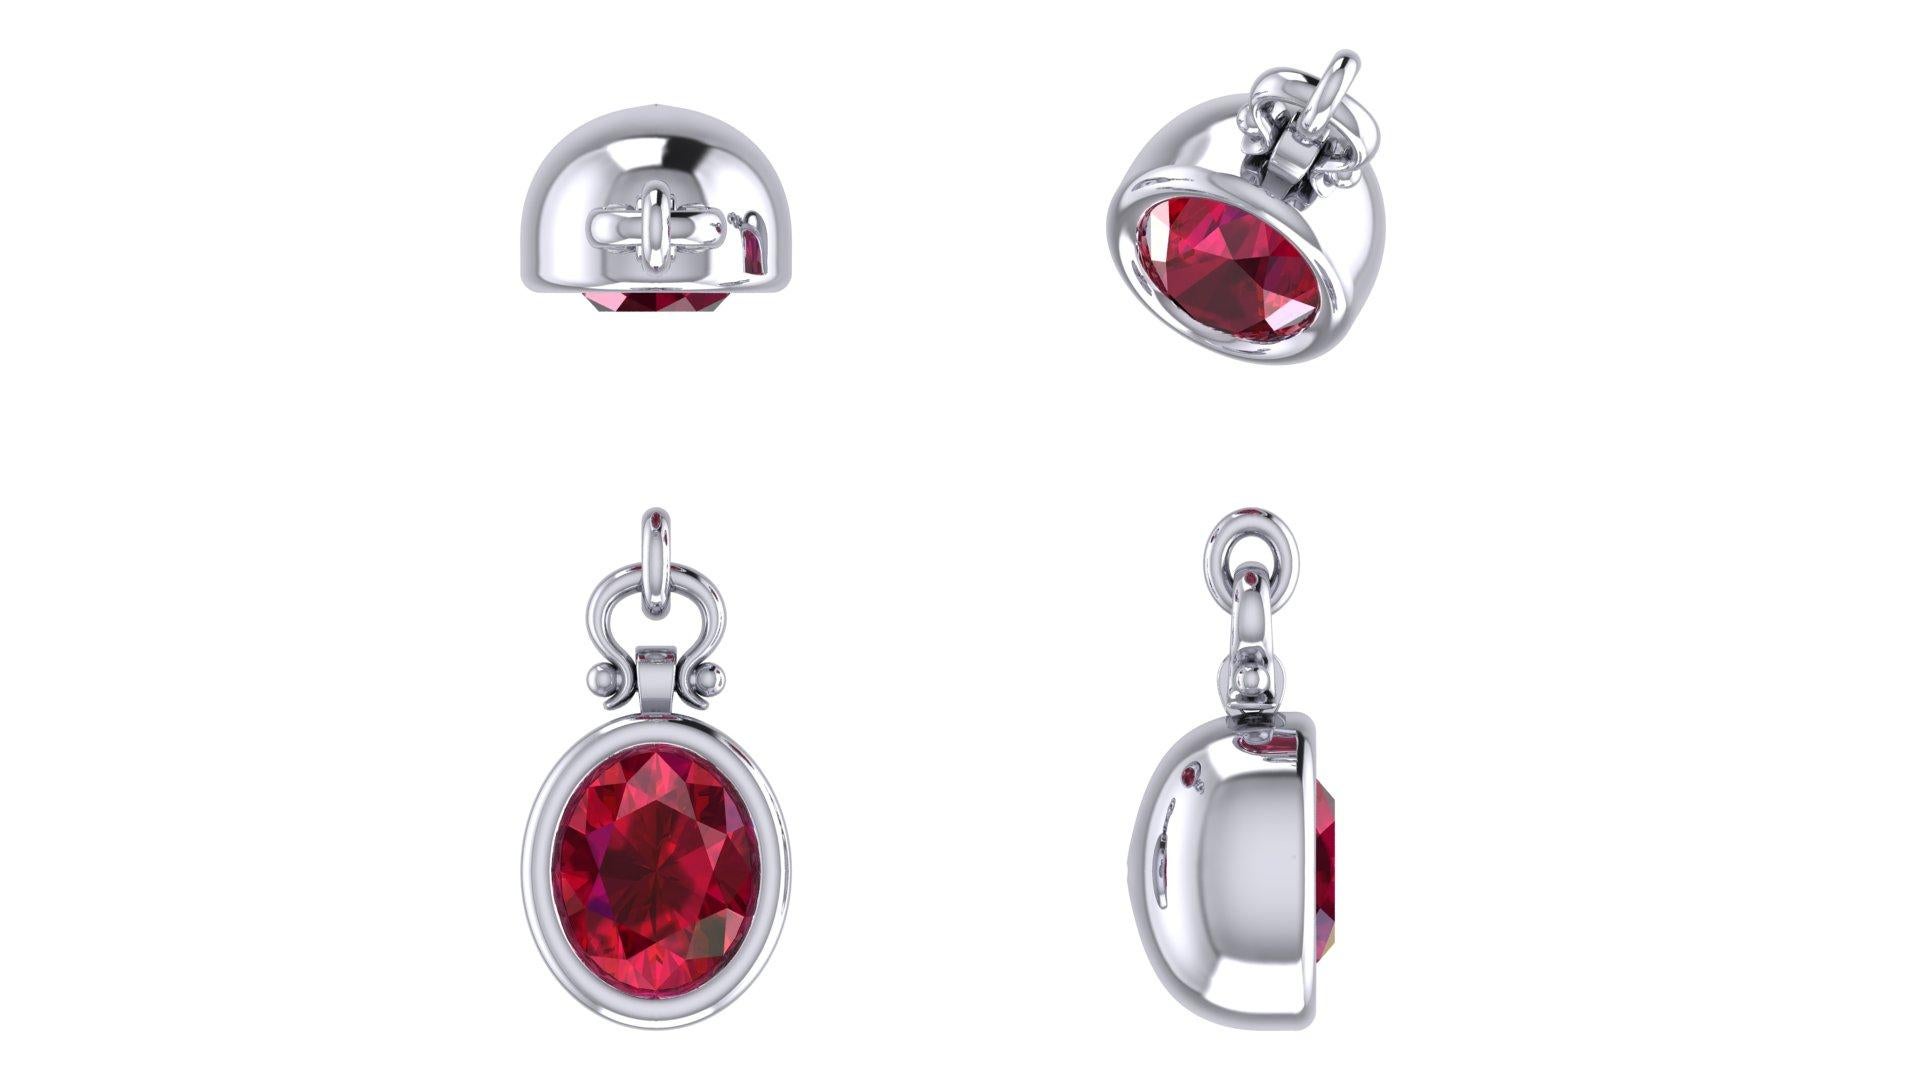 2.5 Carat Emteem Certifiied Oval Cut Ruby Pendant Necklace in 18K For Sale 2